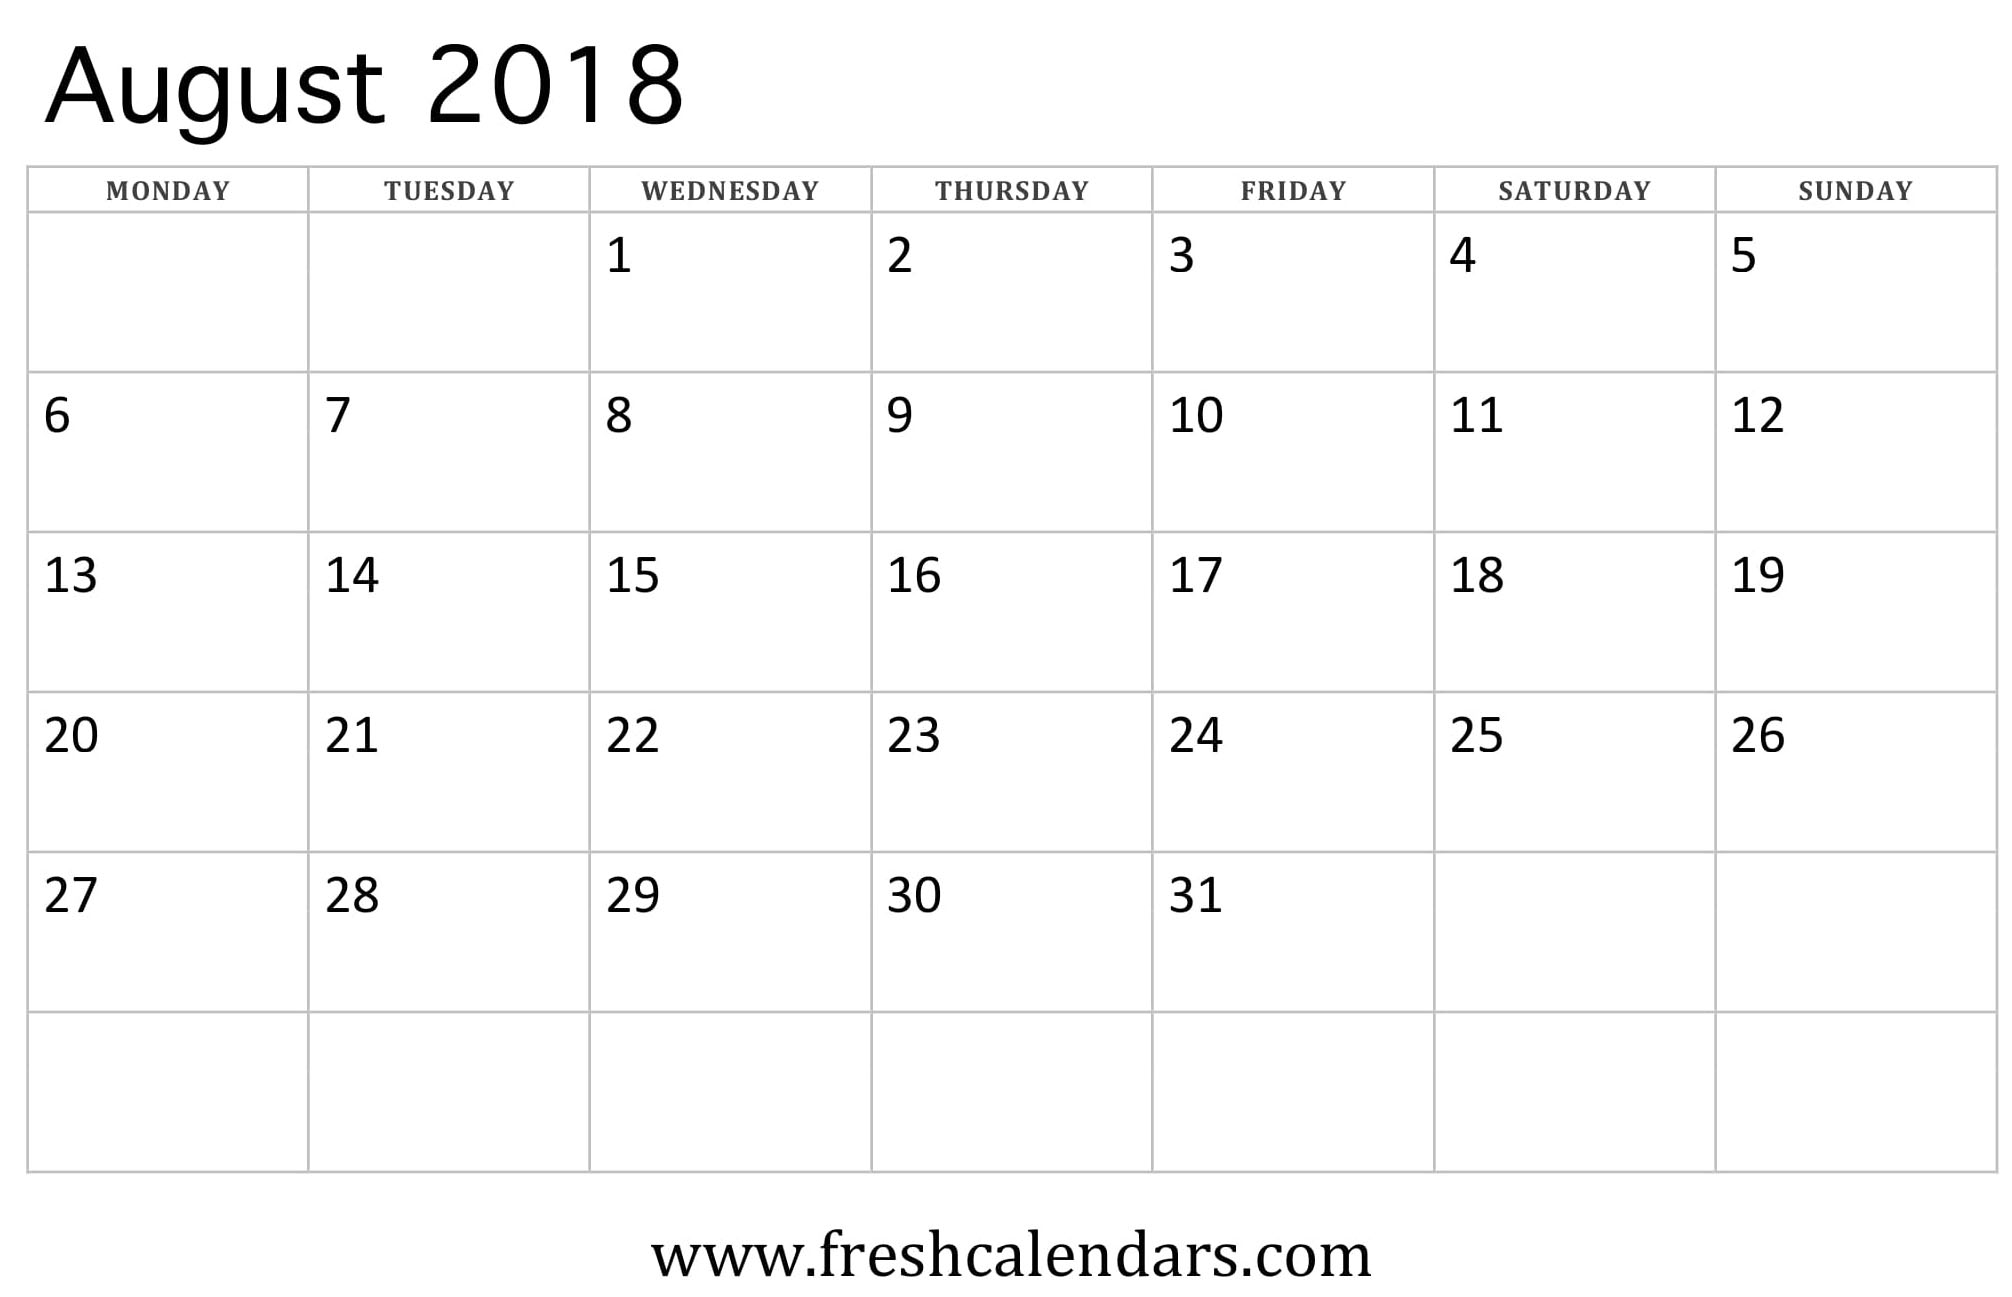 August 2018 Calendar (week starts on monday)